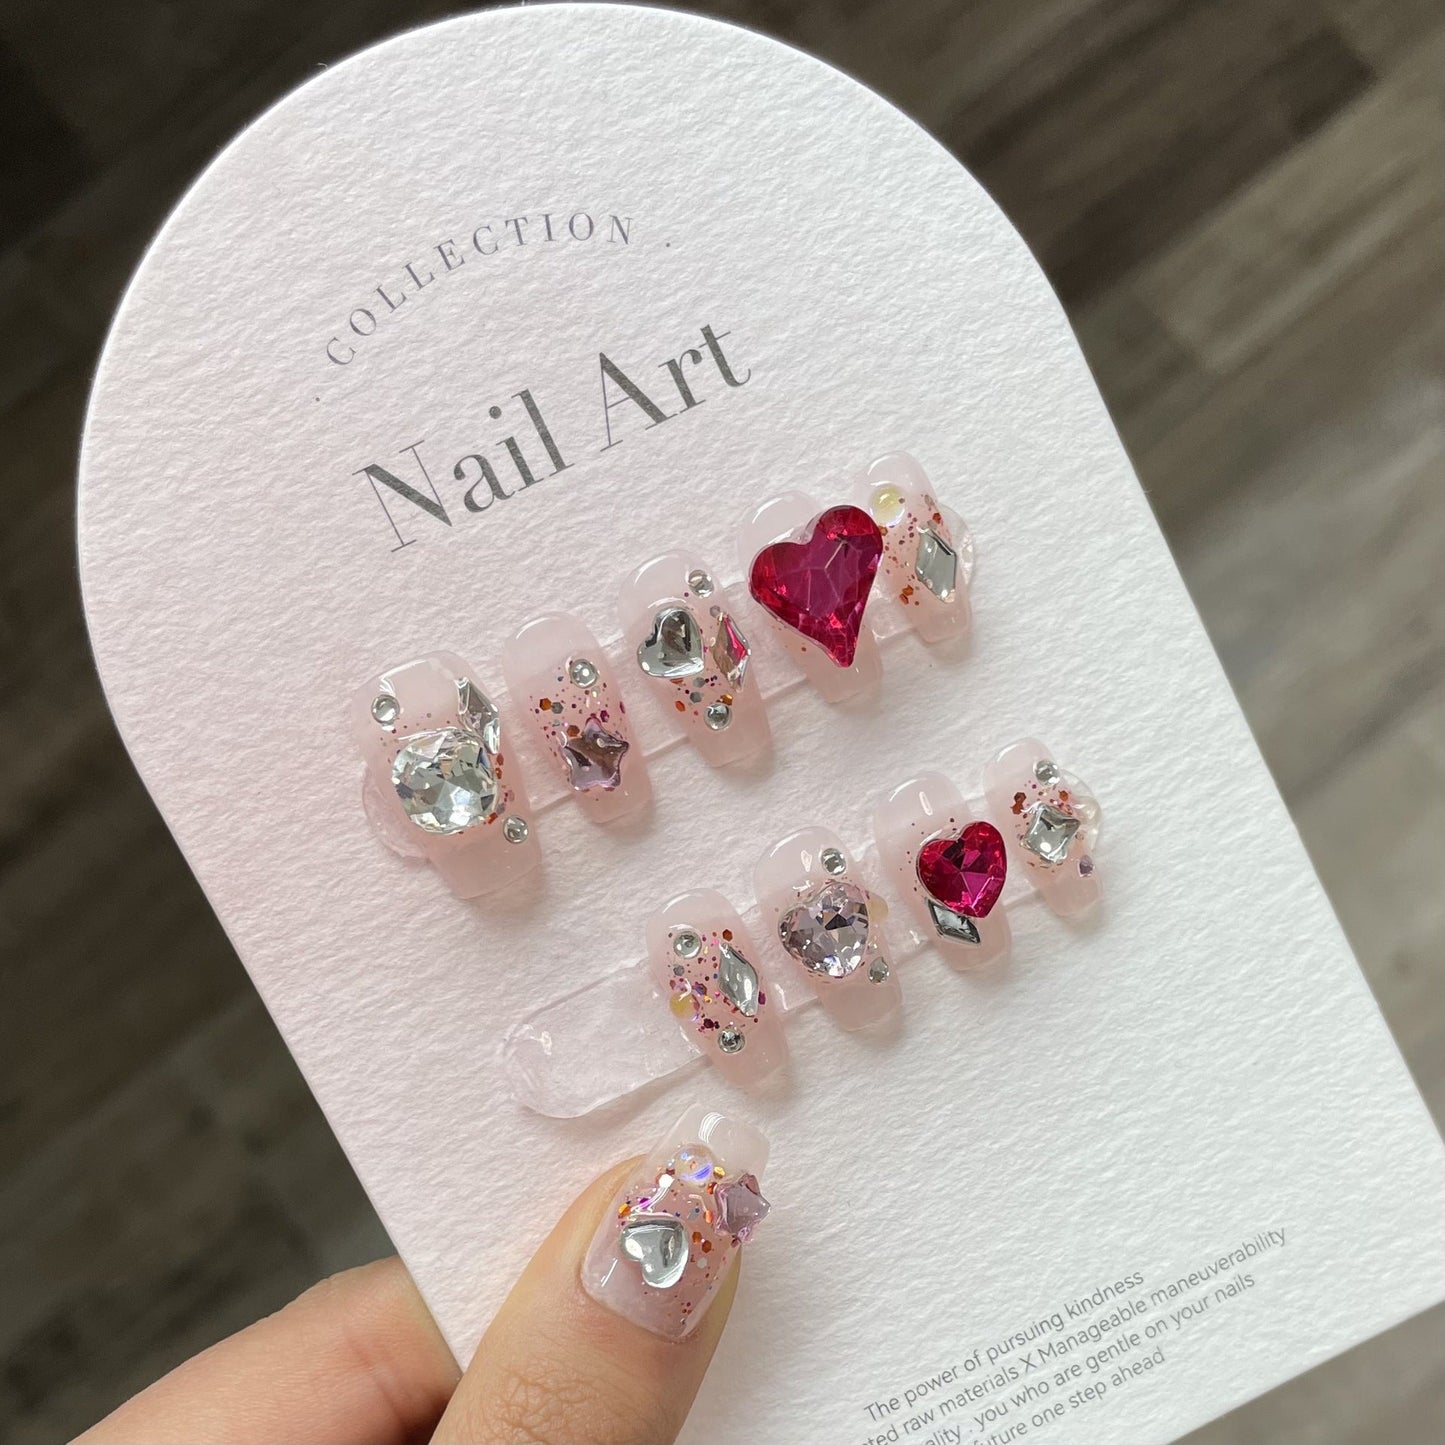 811/820 Rhinestone style press on nails 100% handmade false nails pink